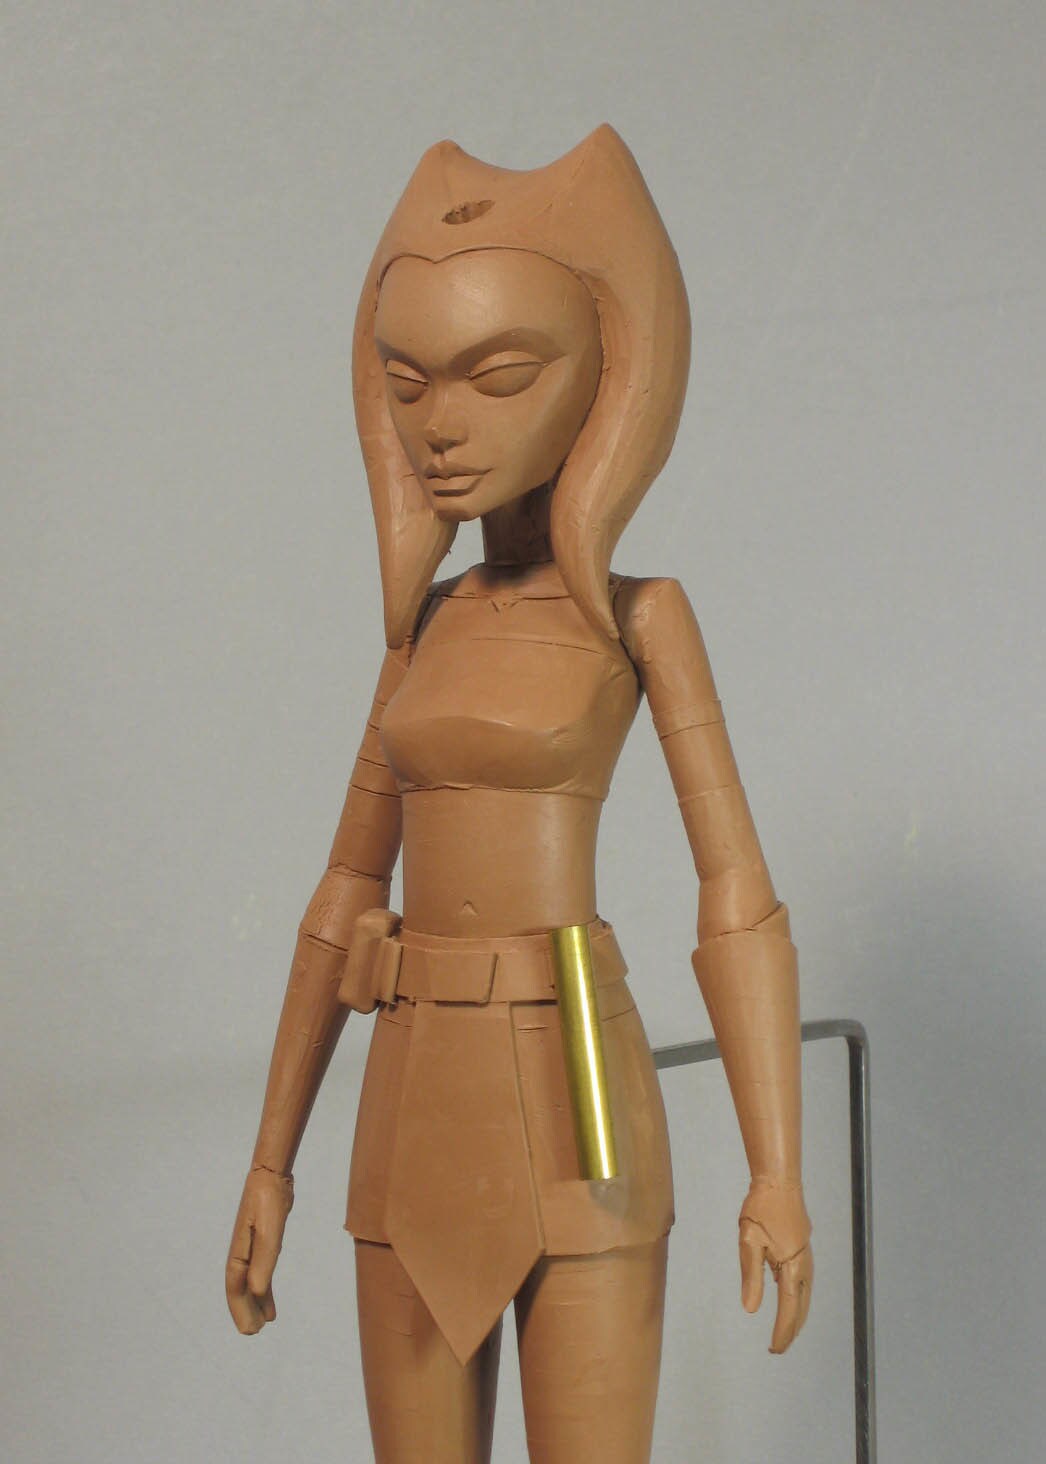 An early character model of Ahsoka Tano.